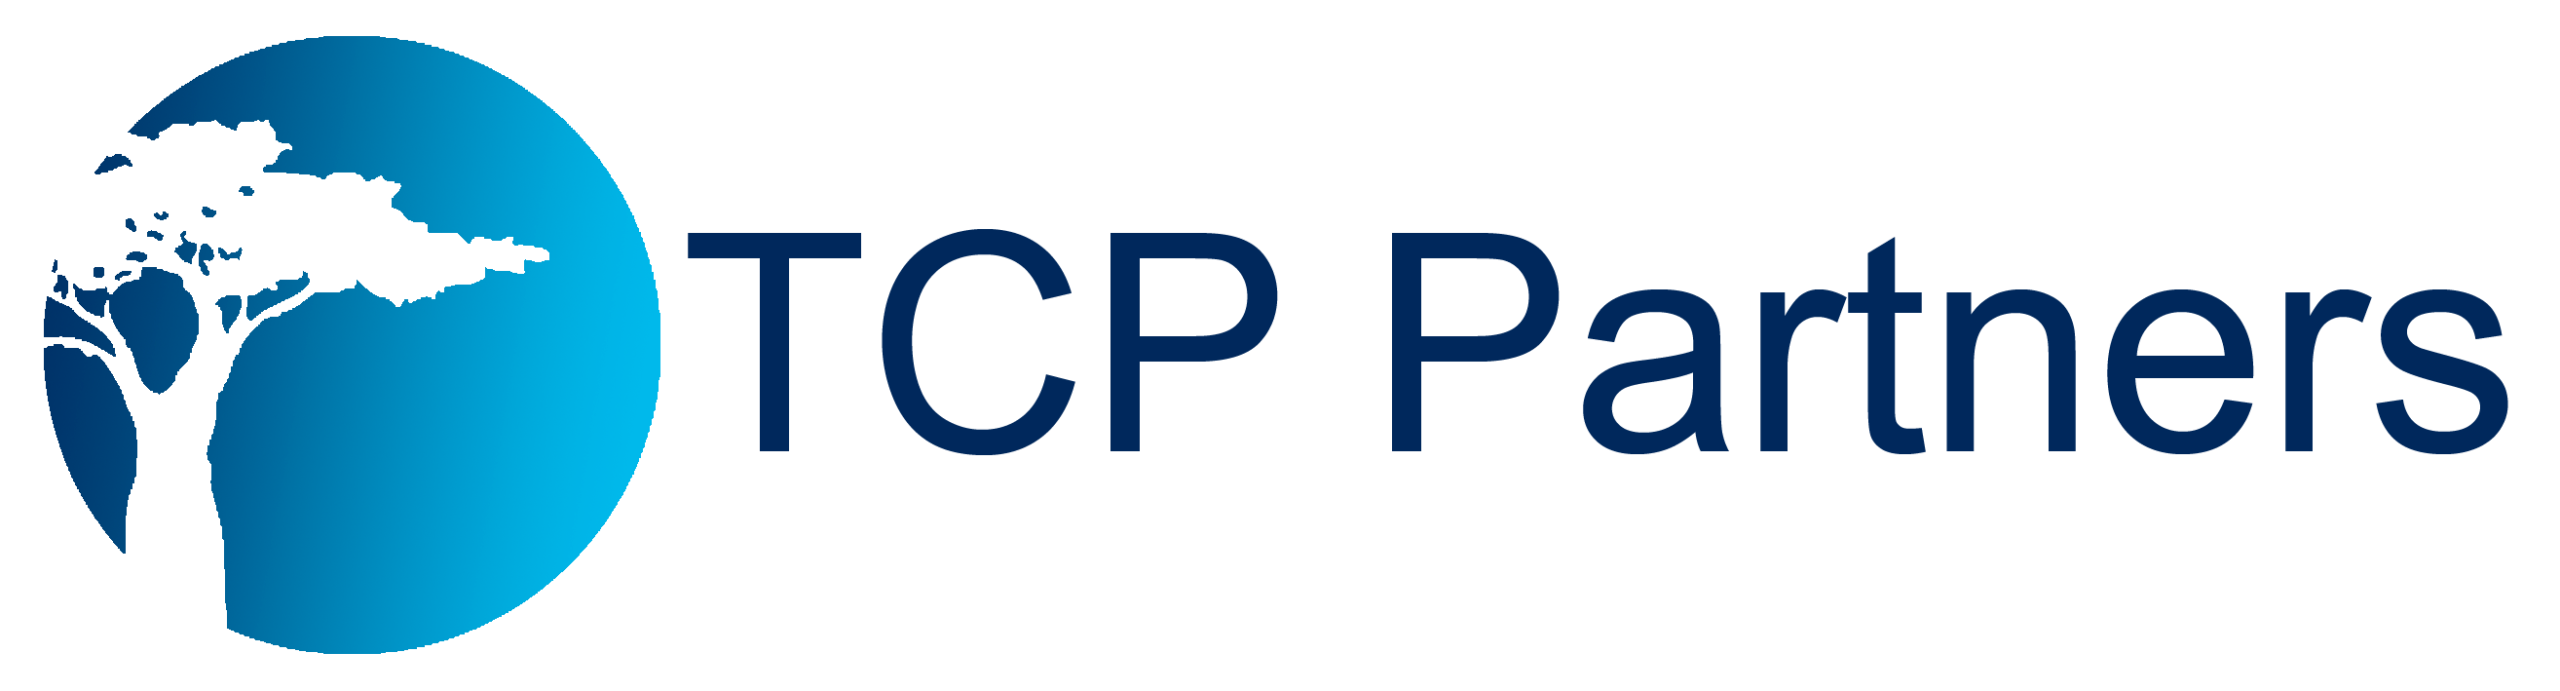 TCP Partners